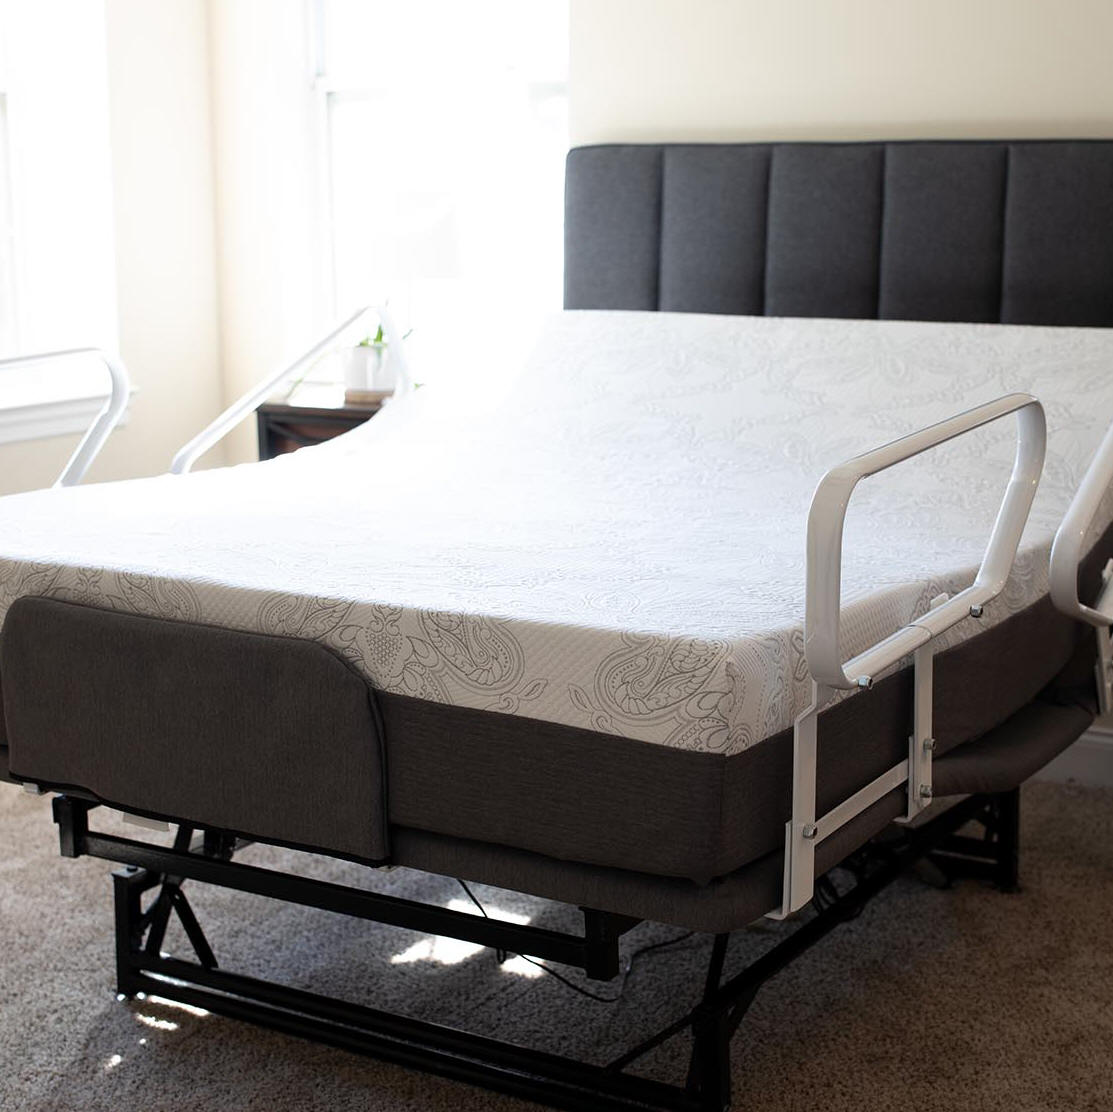 Los Angeles flexabed 3 motor high low adjustable bed